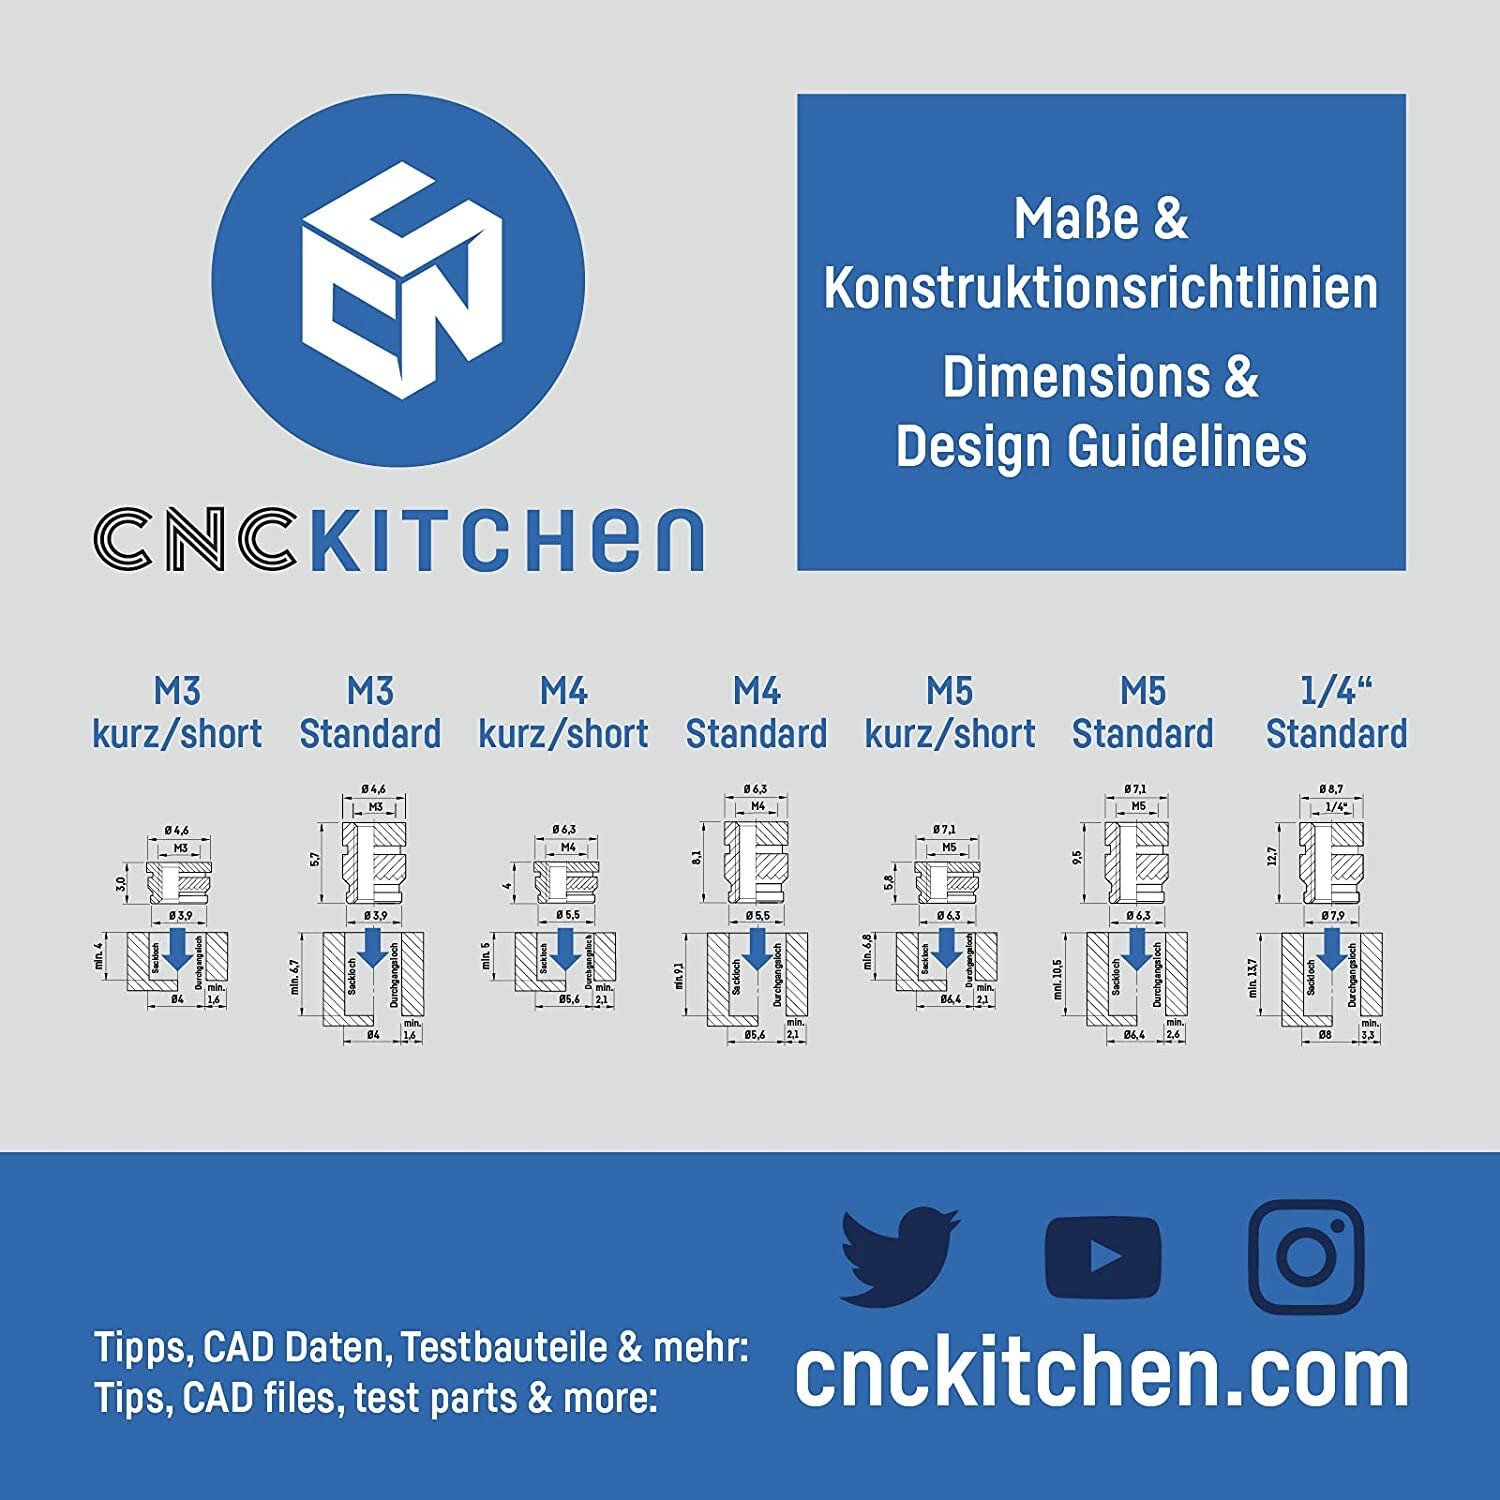 www.cnckitchen.com